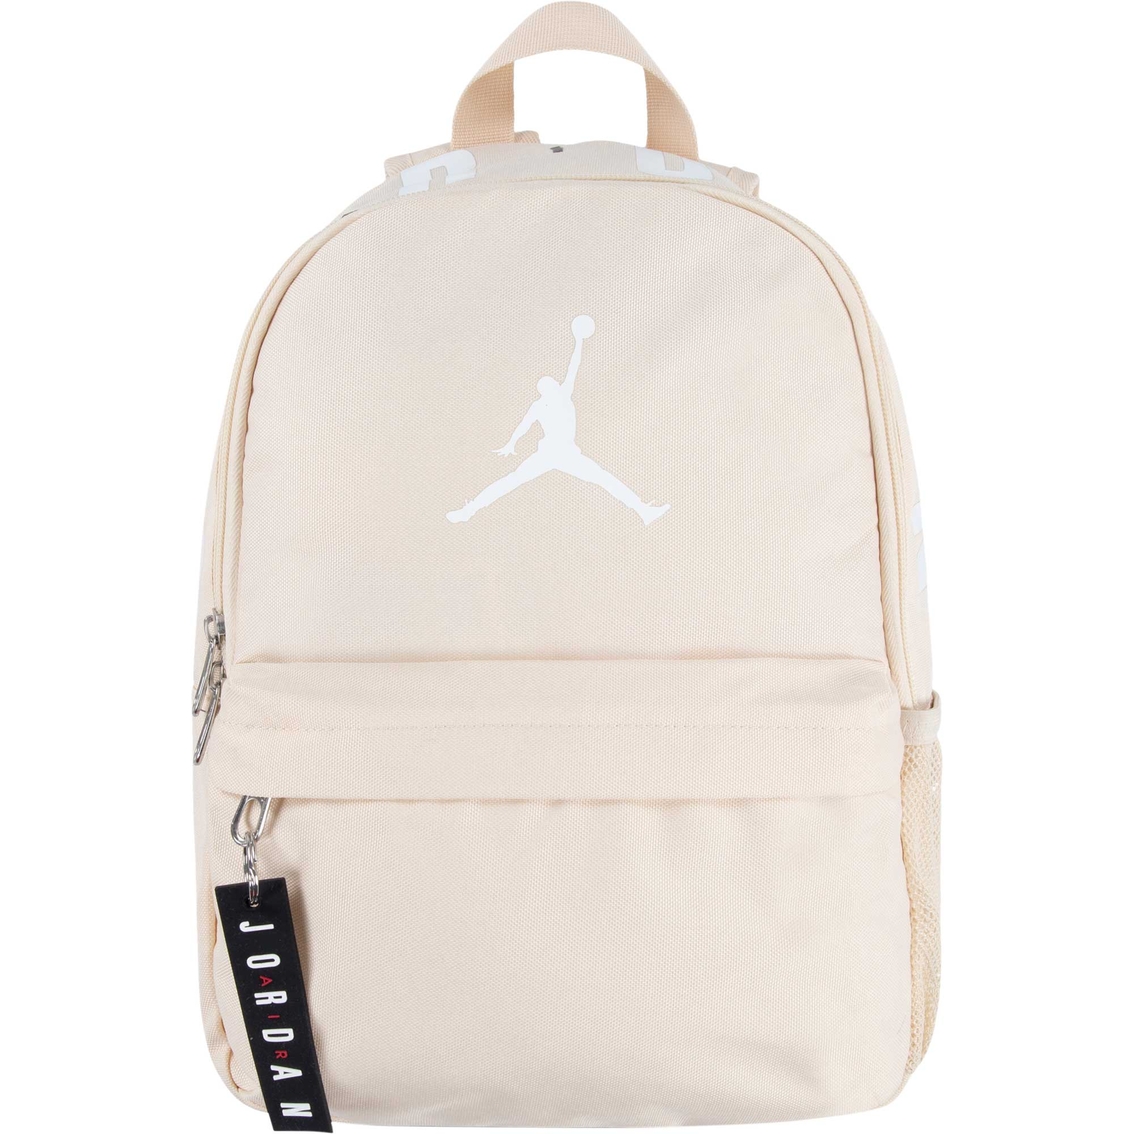 Jordan Air Jordan Mini Backpack | Backpacks | Clothing & Accessories ...